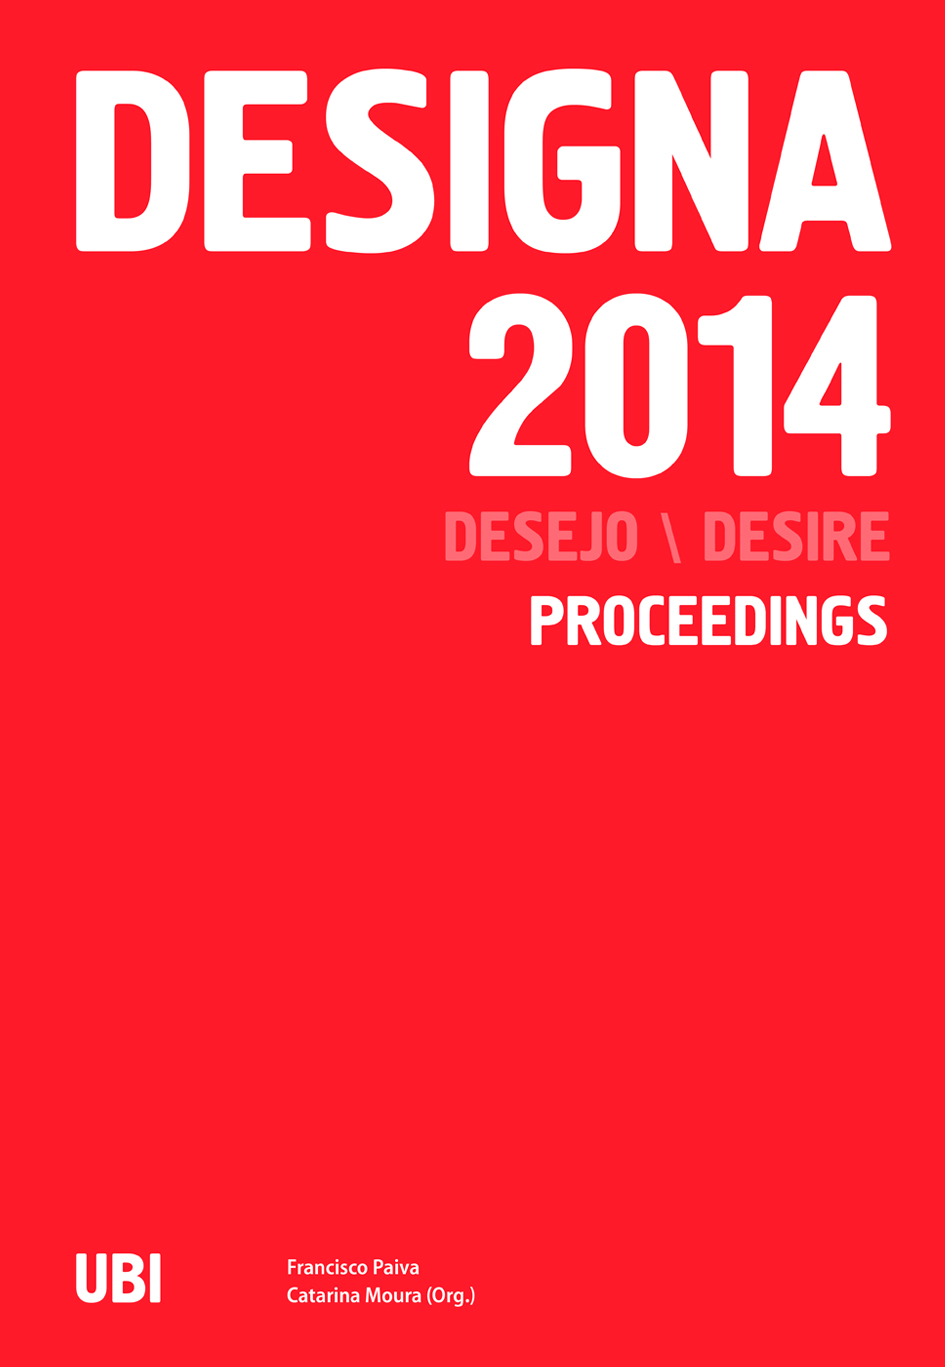 Capa: Francisco Paiva, Catarina Moura (Orgs.) (2015) DESIGNA  2014  - Desire. Communication  +  Philosophy  +  Humanities. .